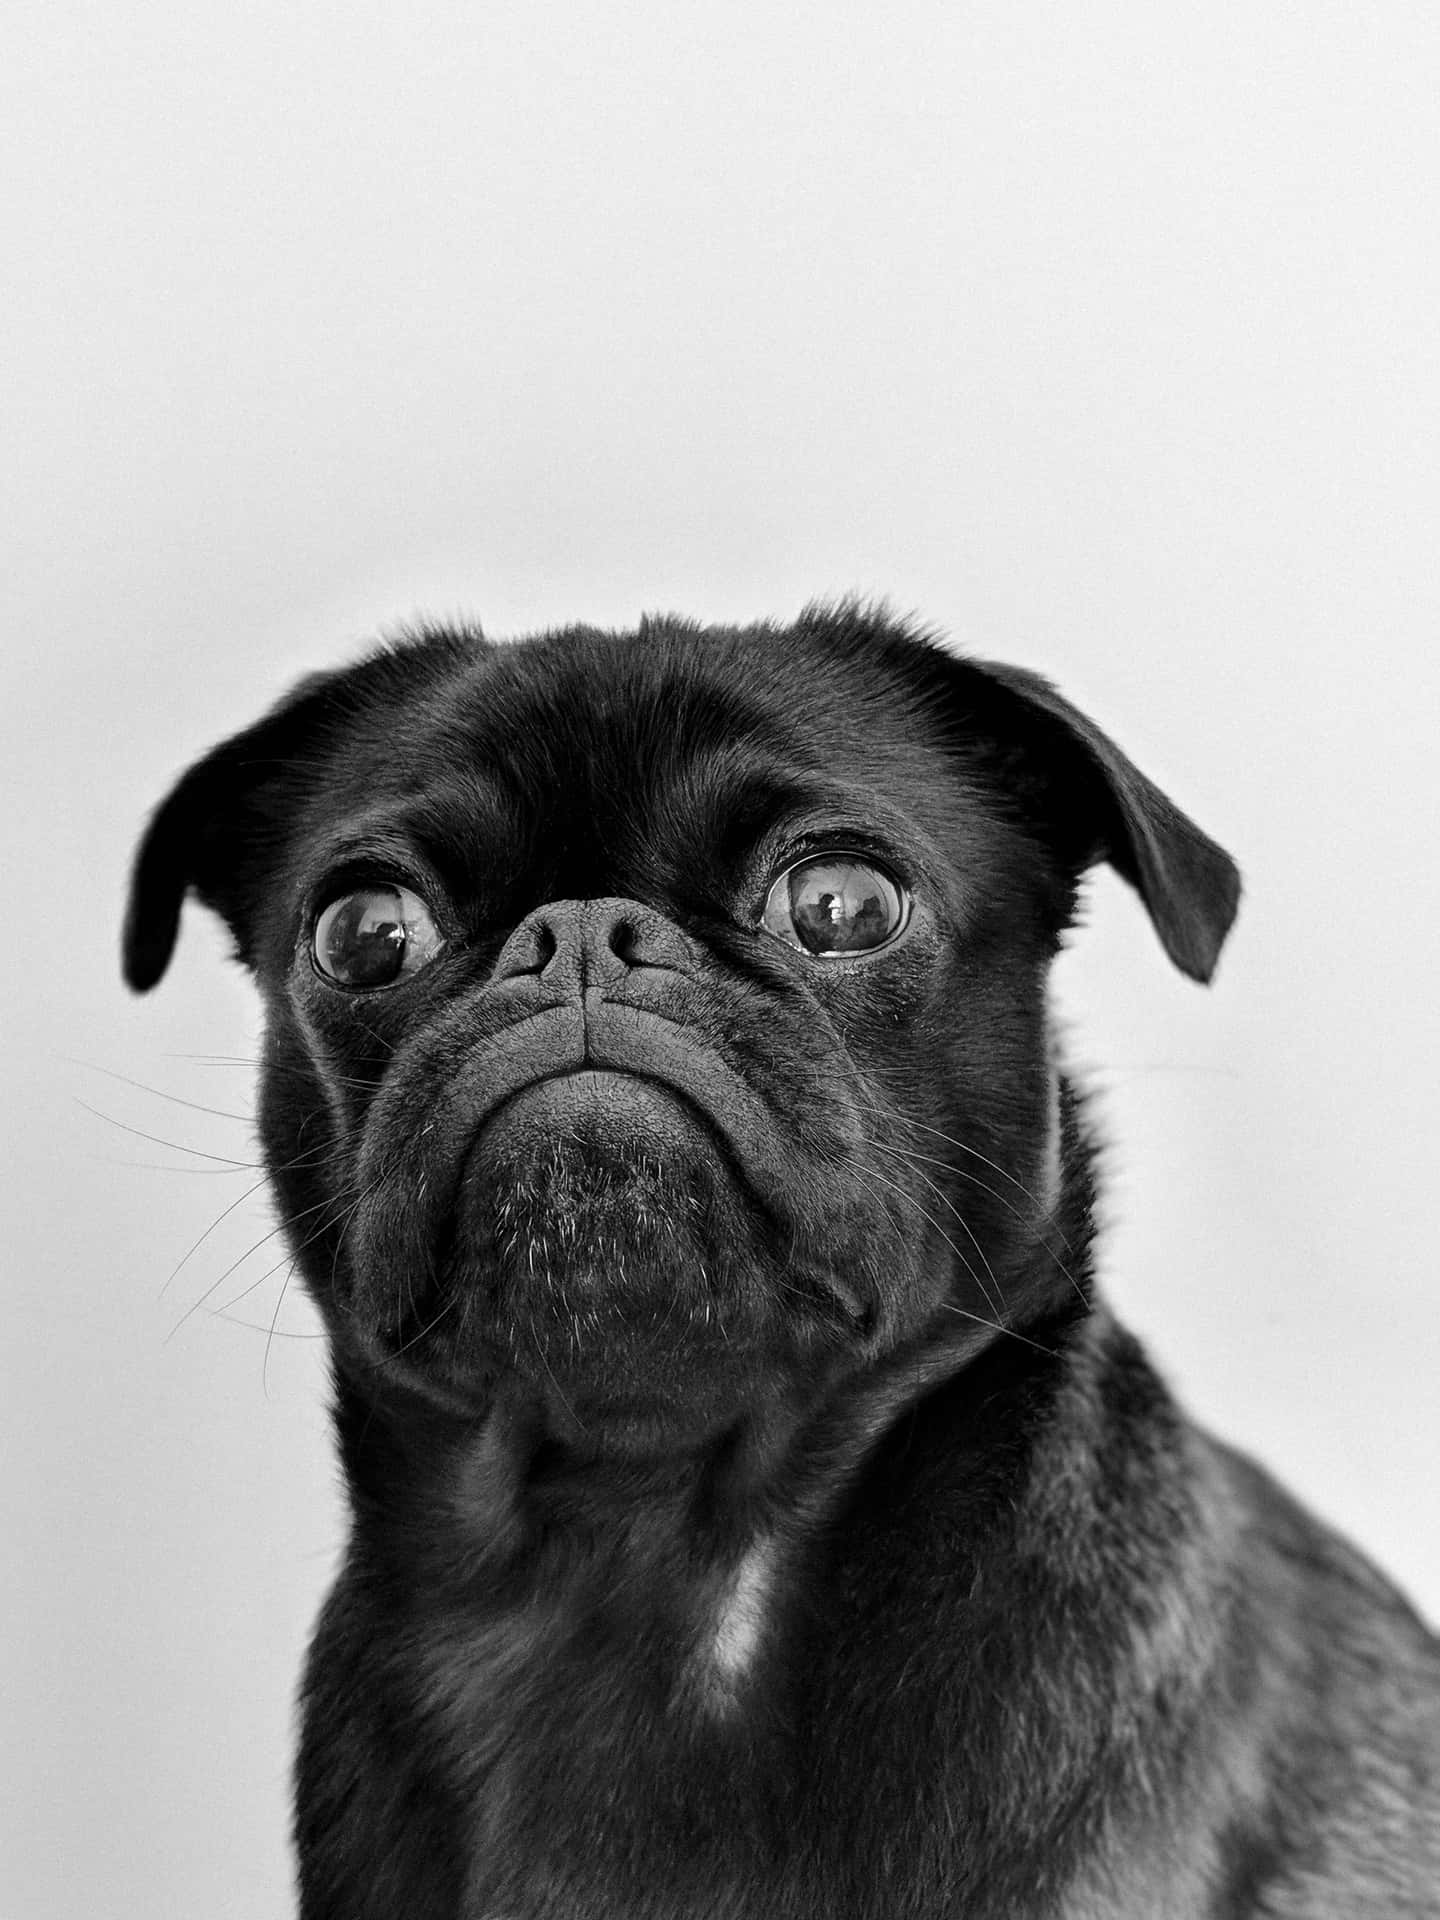 Adorable Black Pug Dog on a White Background Wallpaper